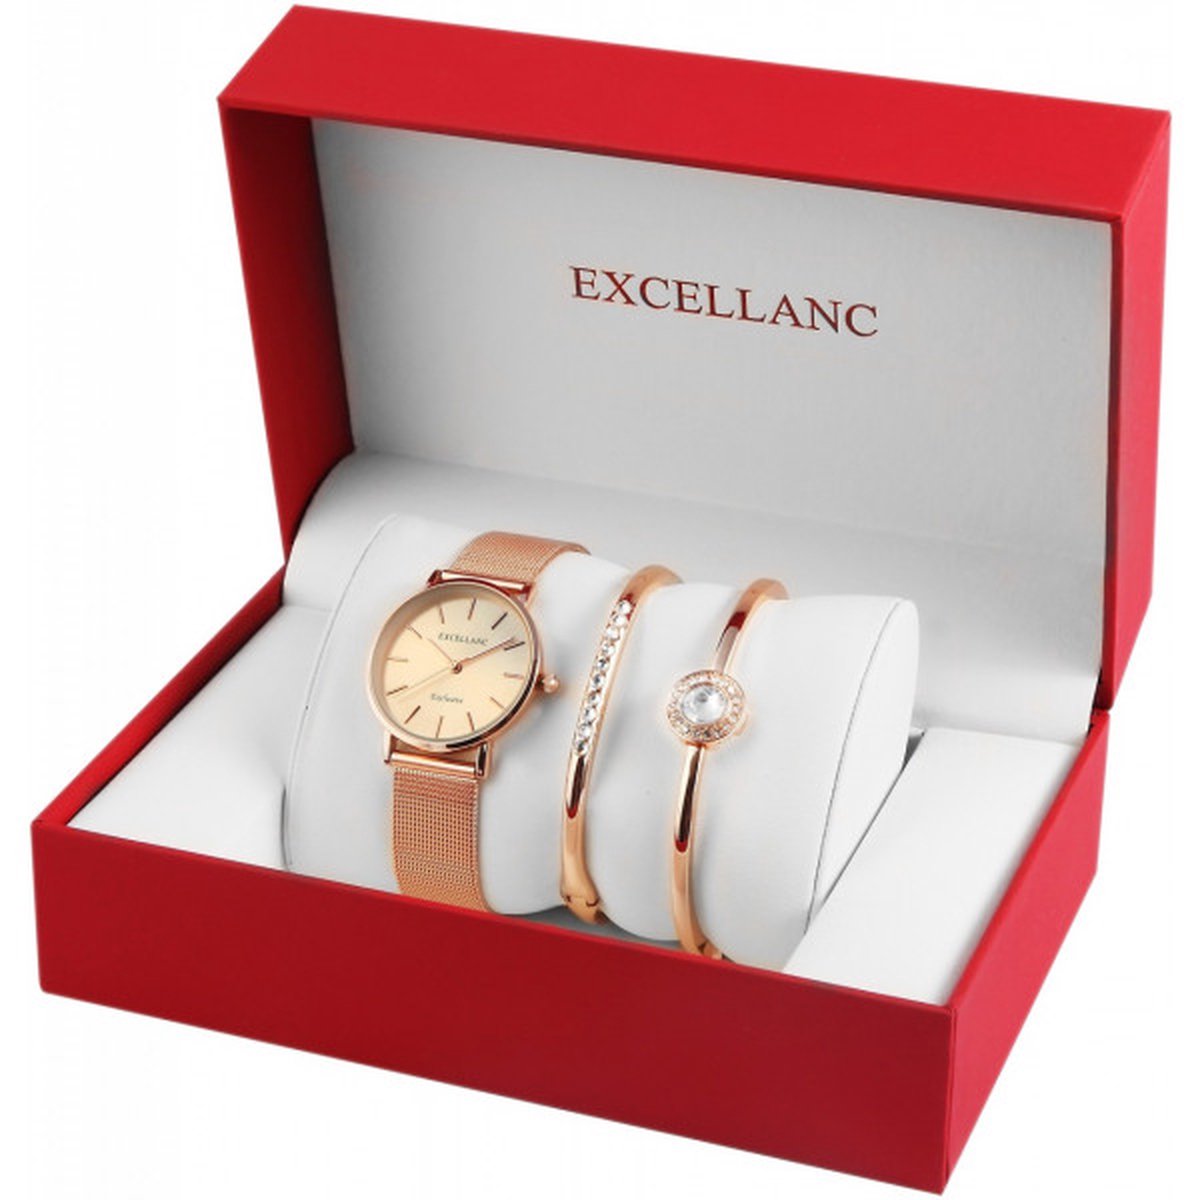 Excellanc horlogeset - giftset dameshorloge met 2 armbanden - rosekleurig